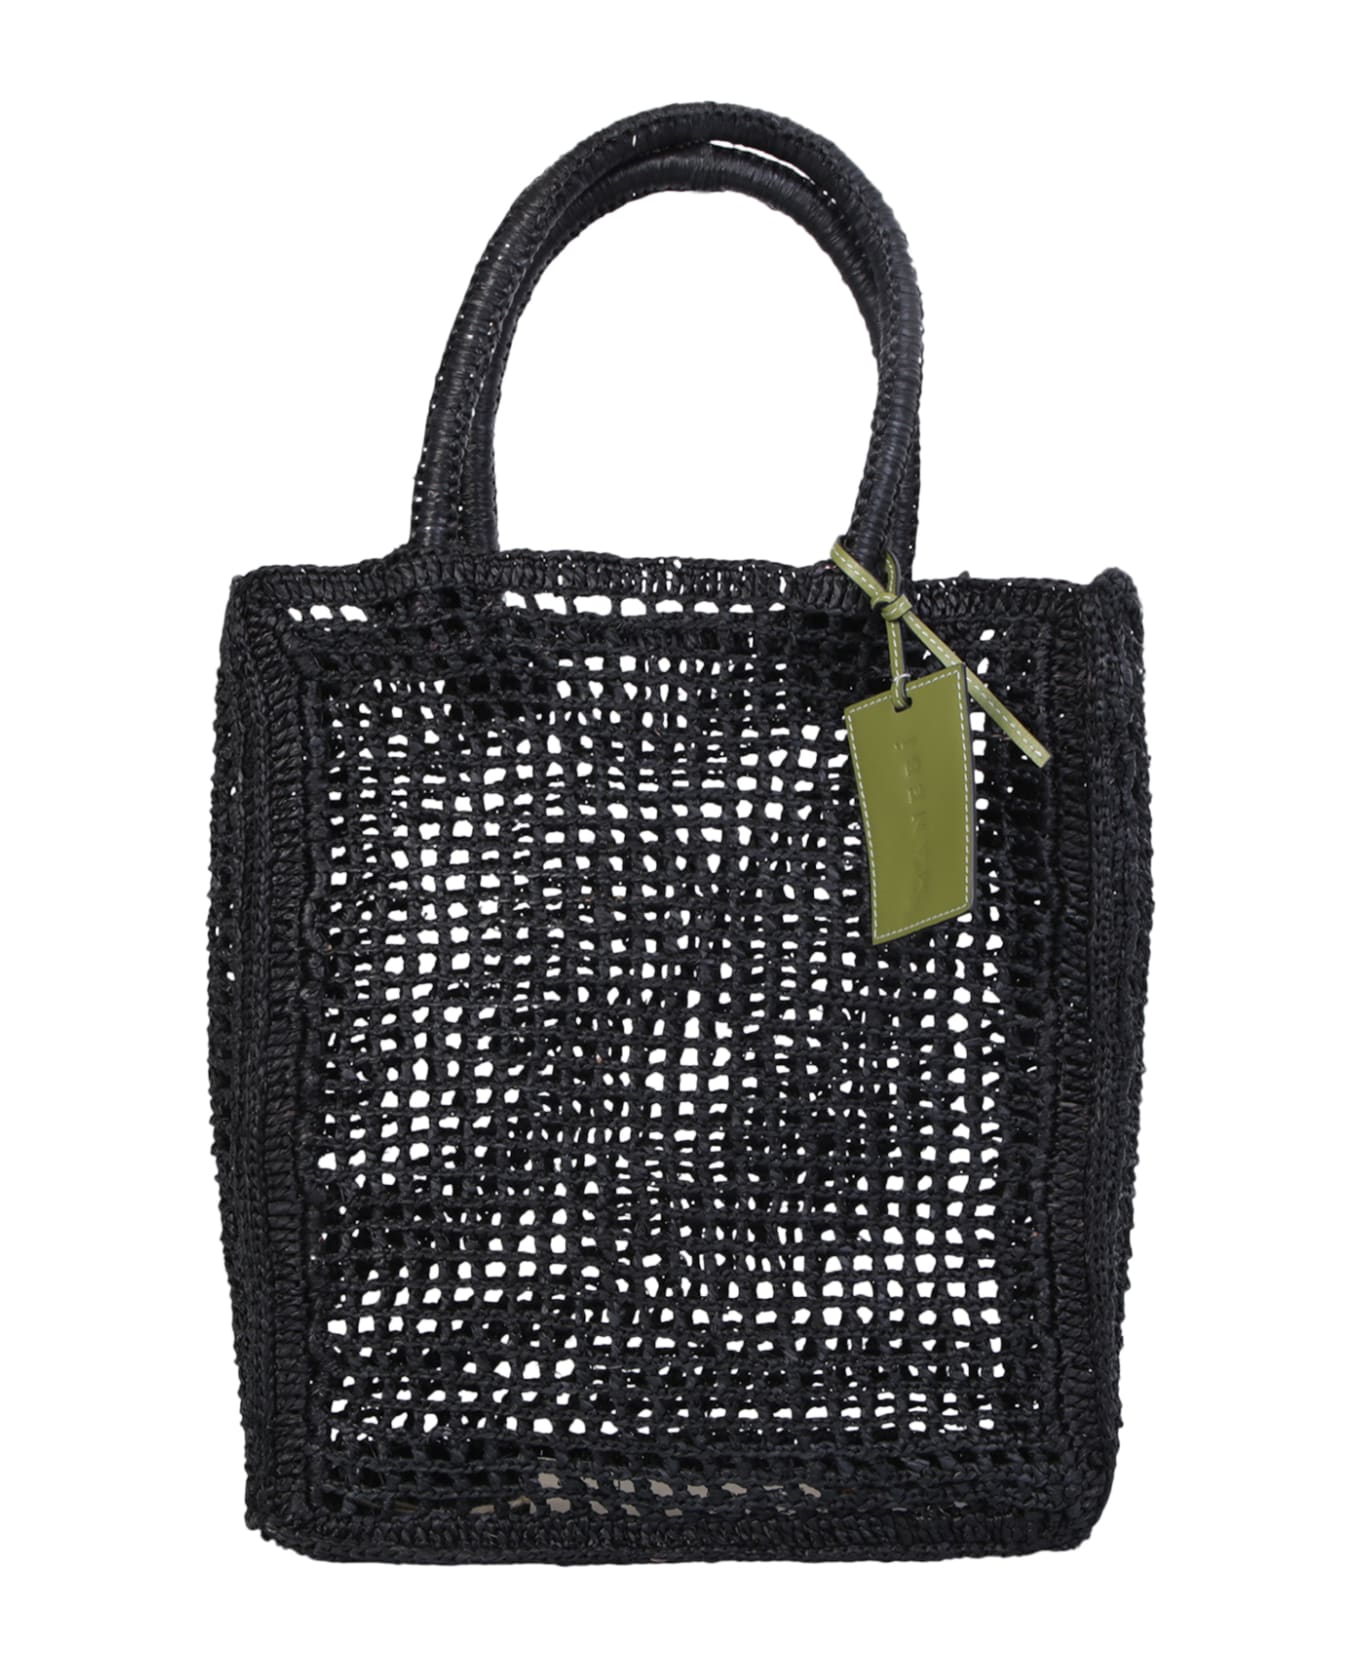 Manebi Woven Raffia Black Bag By Manebi - Black